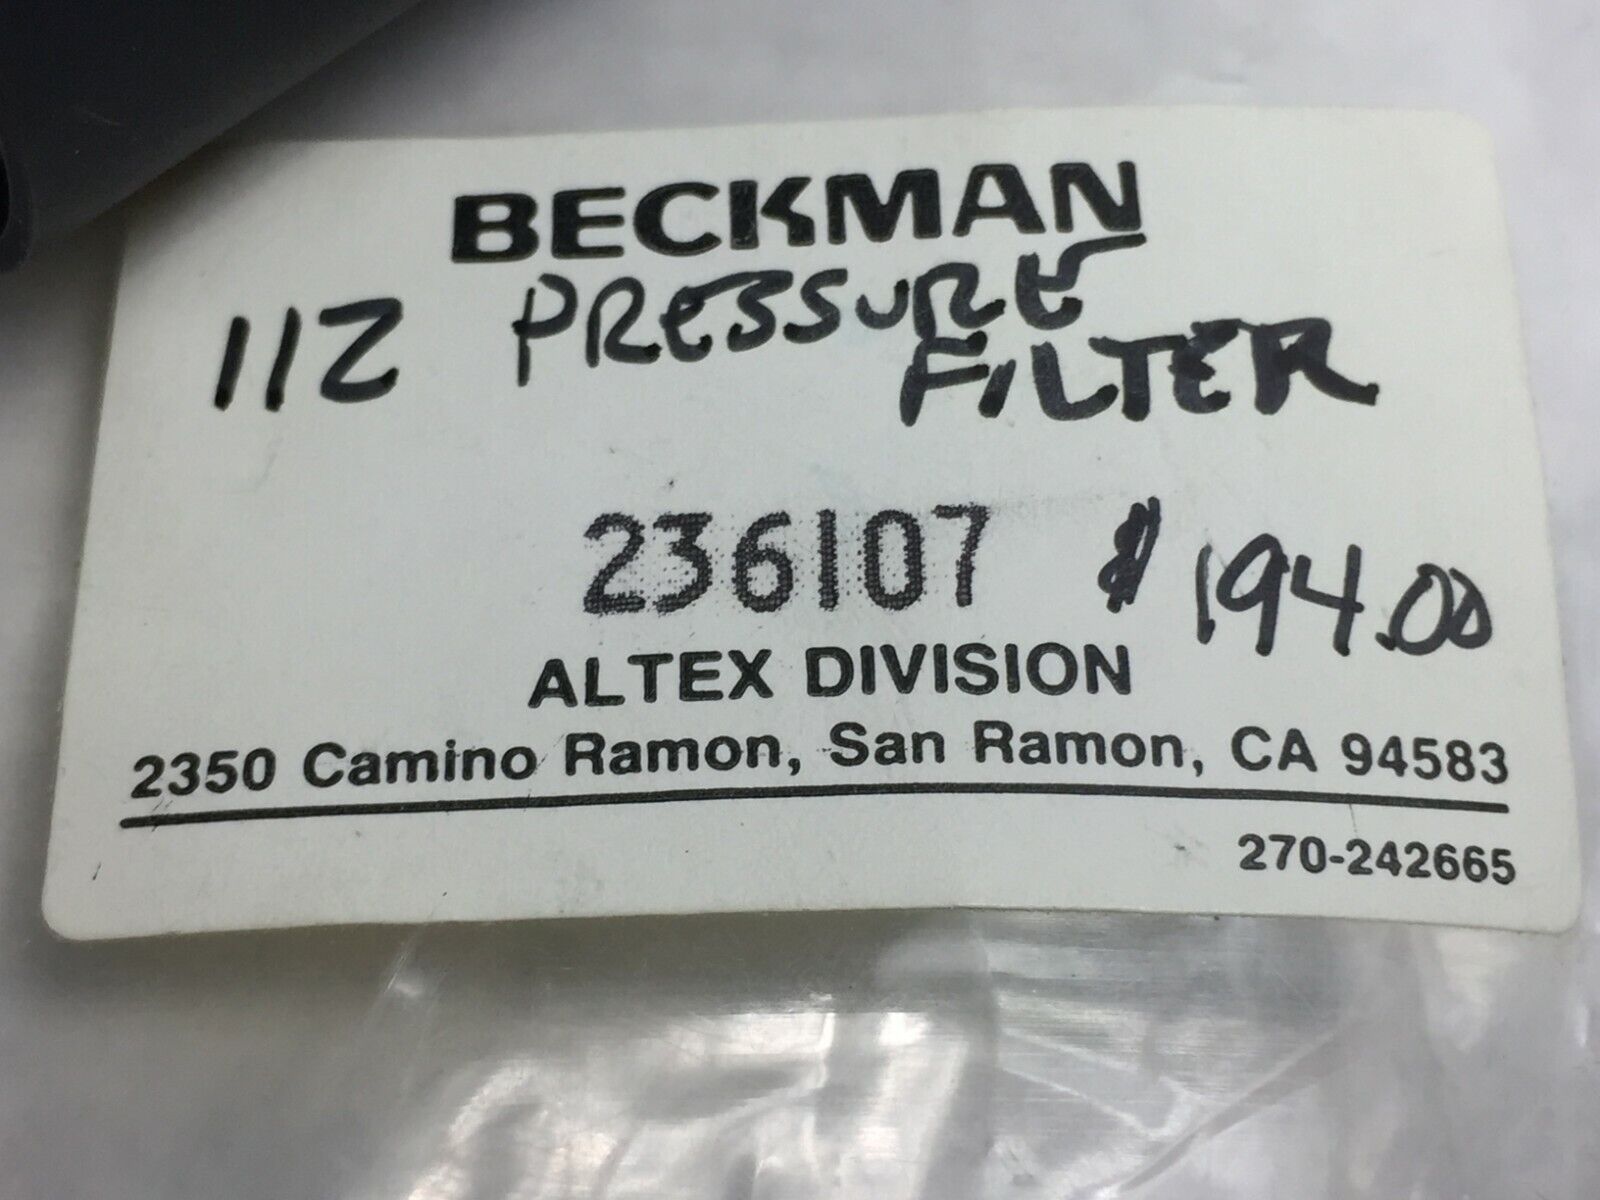 Beckman Pressure Filter 236107